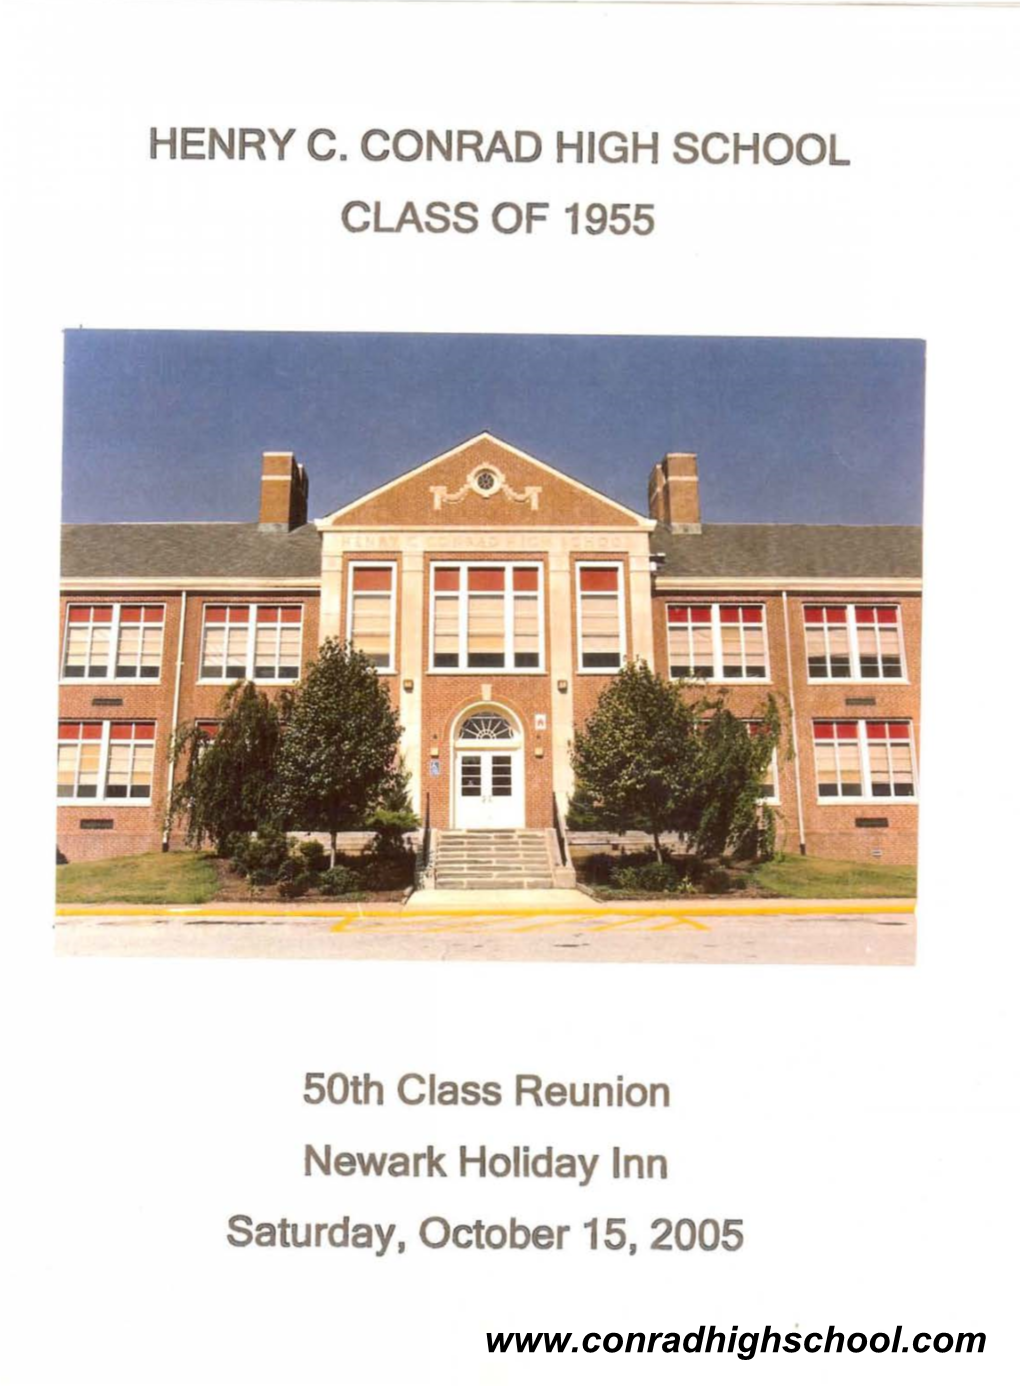 HENRY C. CONRAD HIGH SCHOOL CLASS of 1955 50Th Class